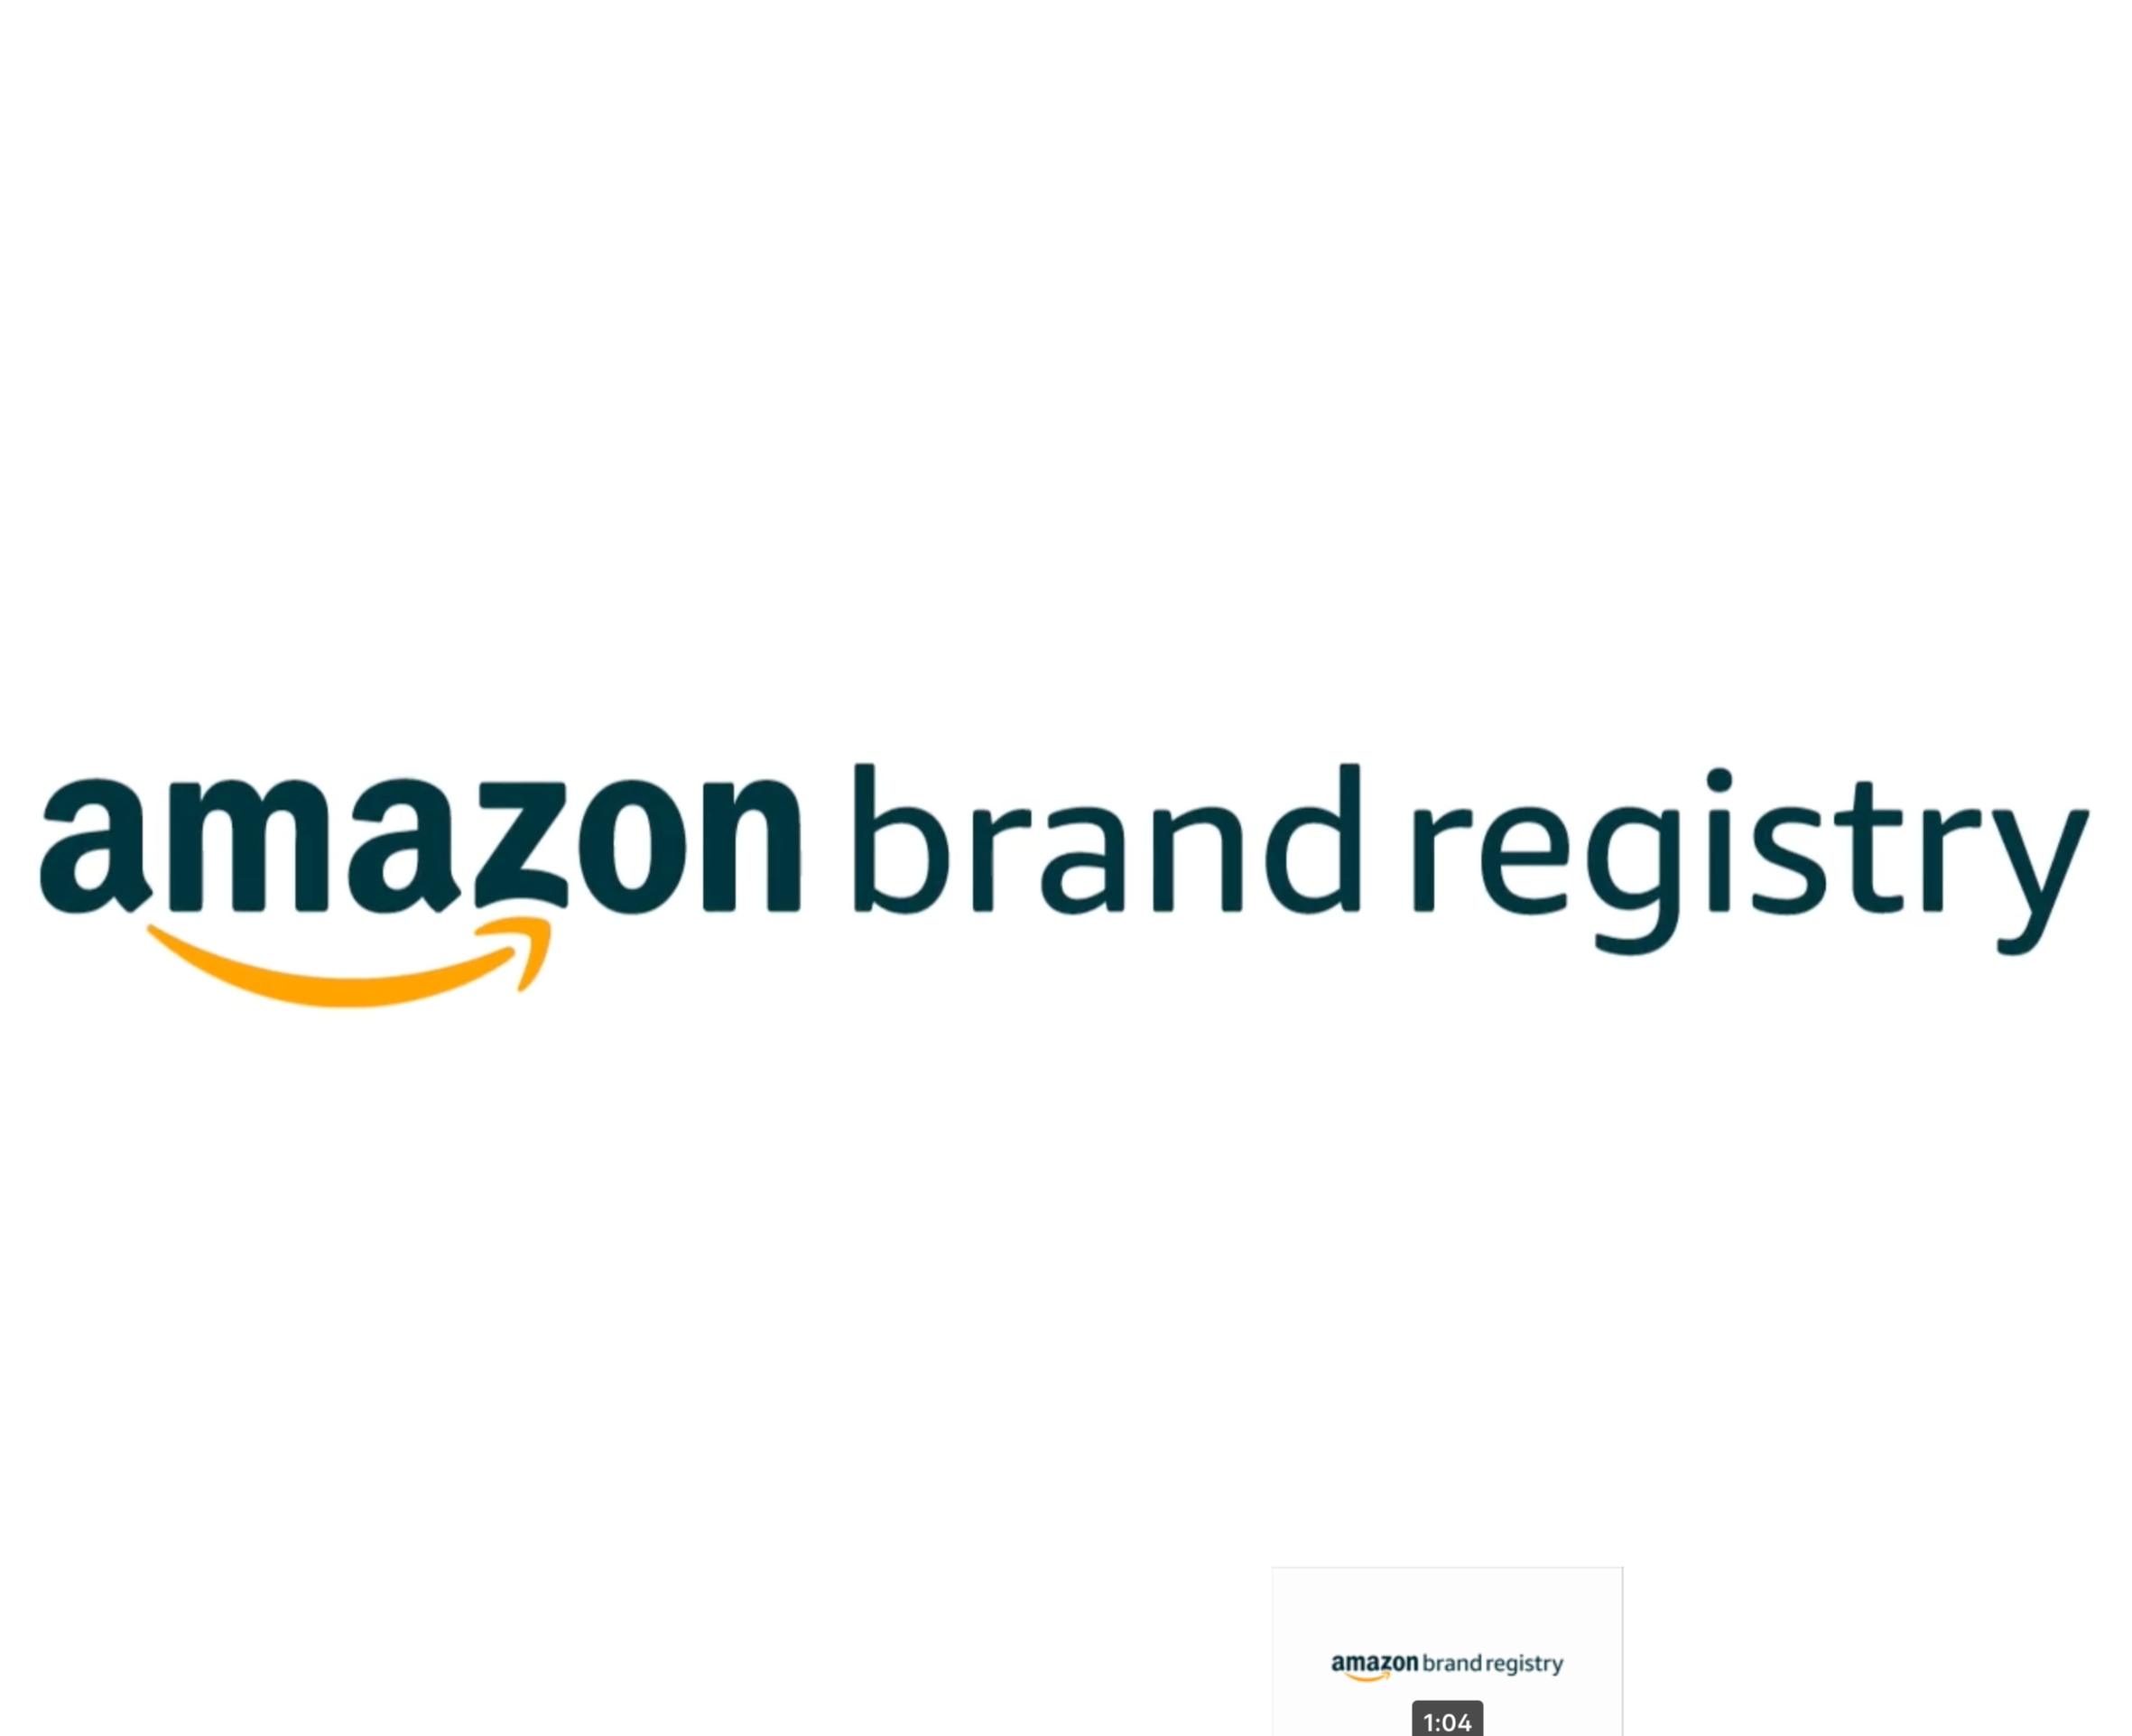 Inscription Amazon Brand Registry - Protection de Marque sur Amazon